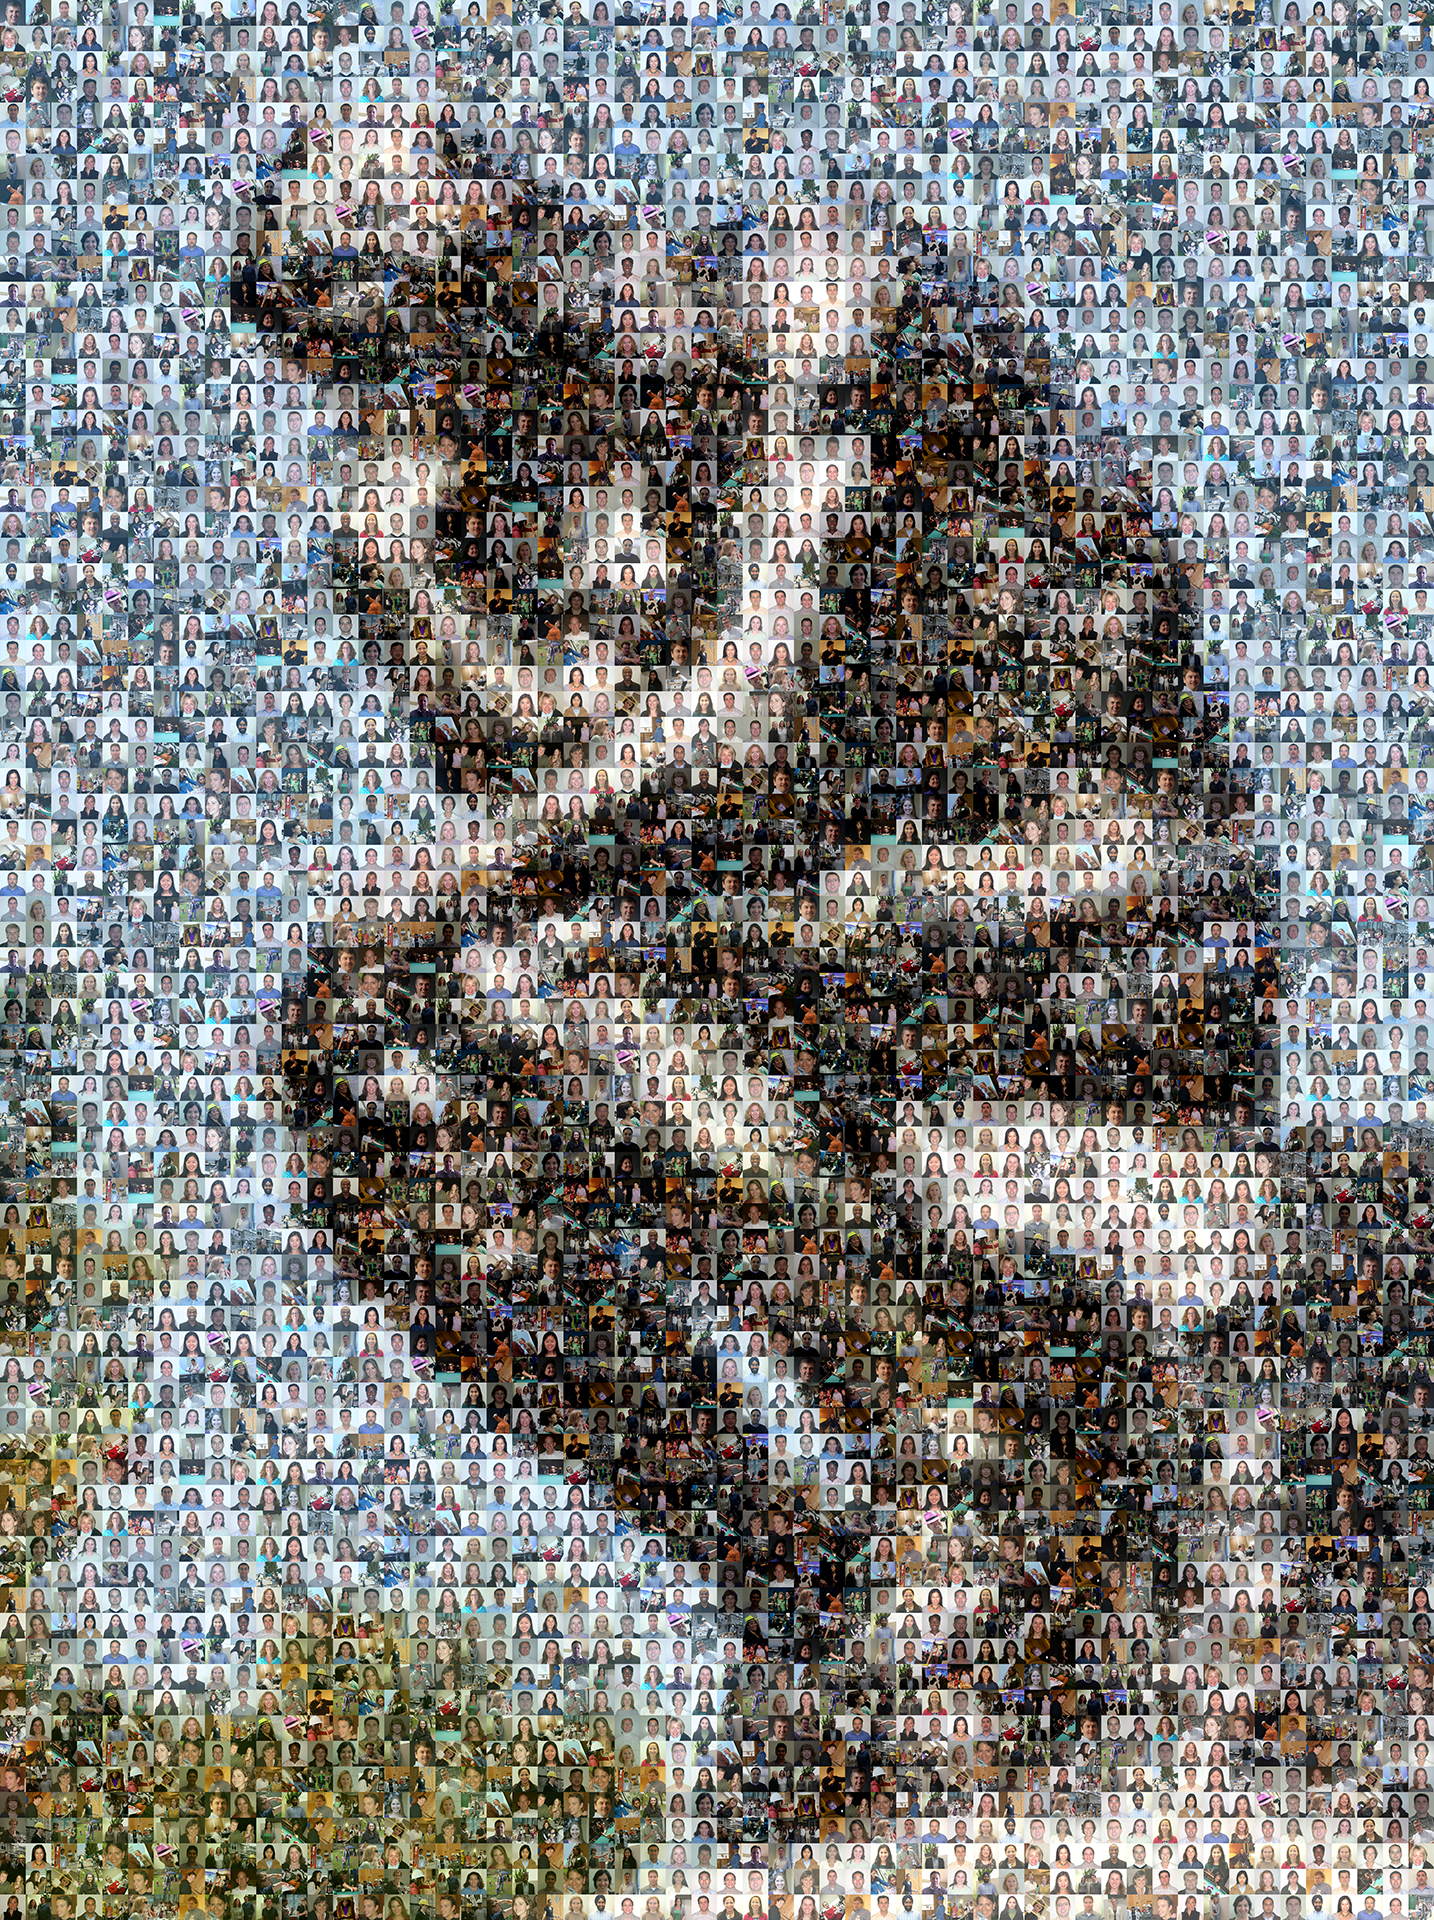 photo mosaic created using 145 employee photos